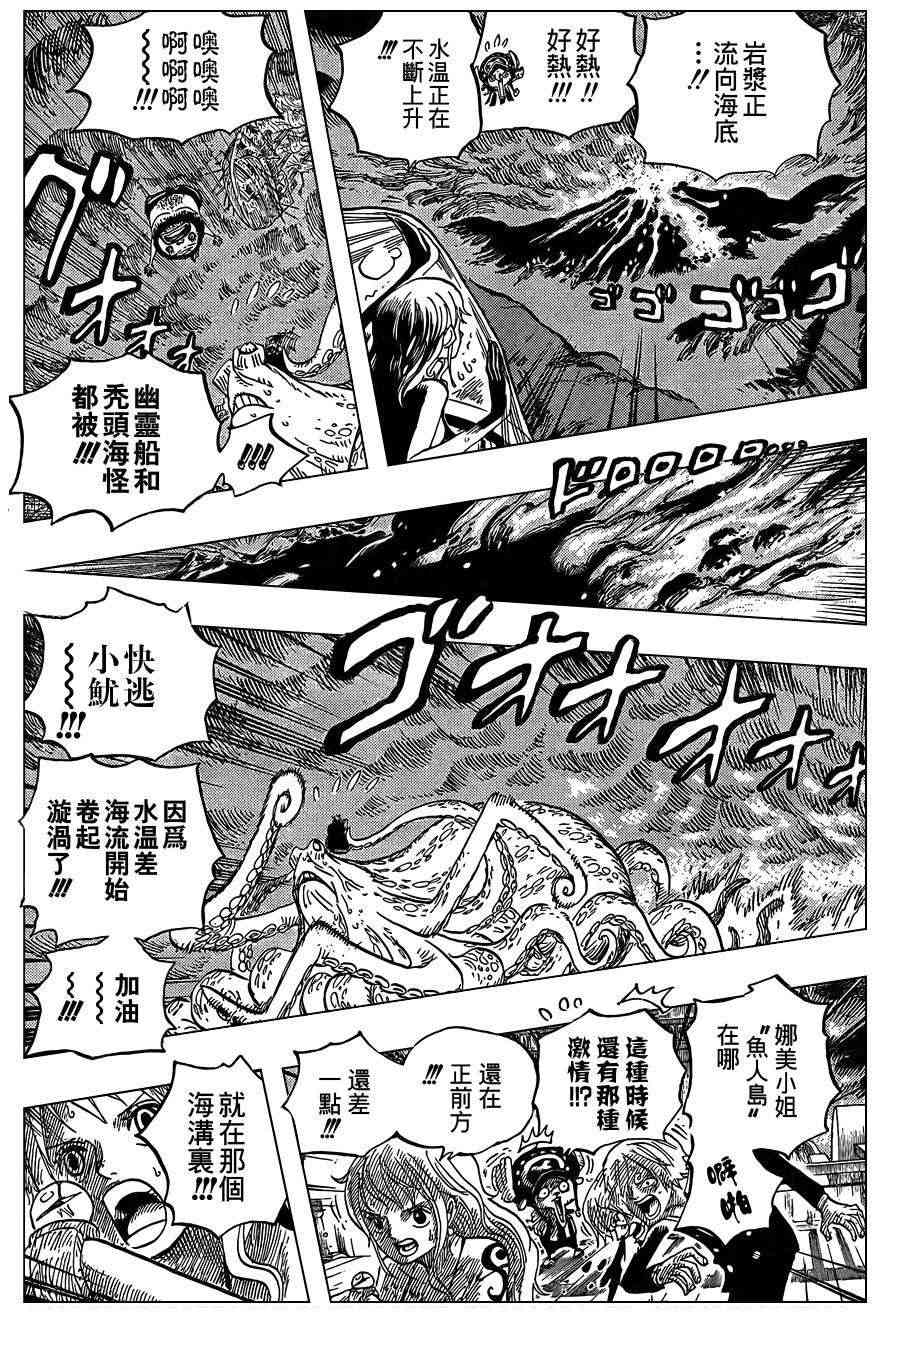 One Piece Manga 607 Spoiler Pics 0512